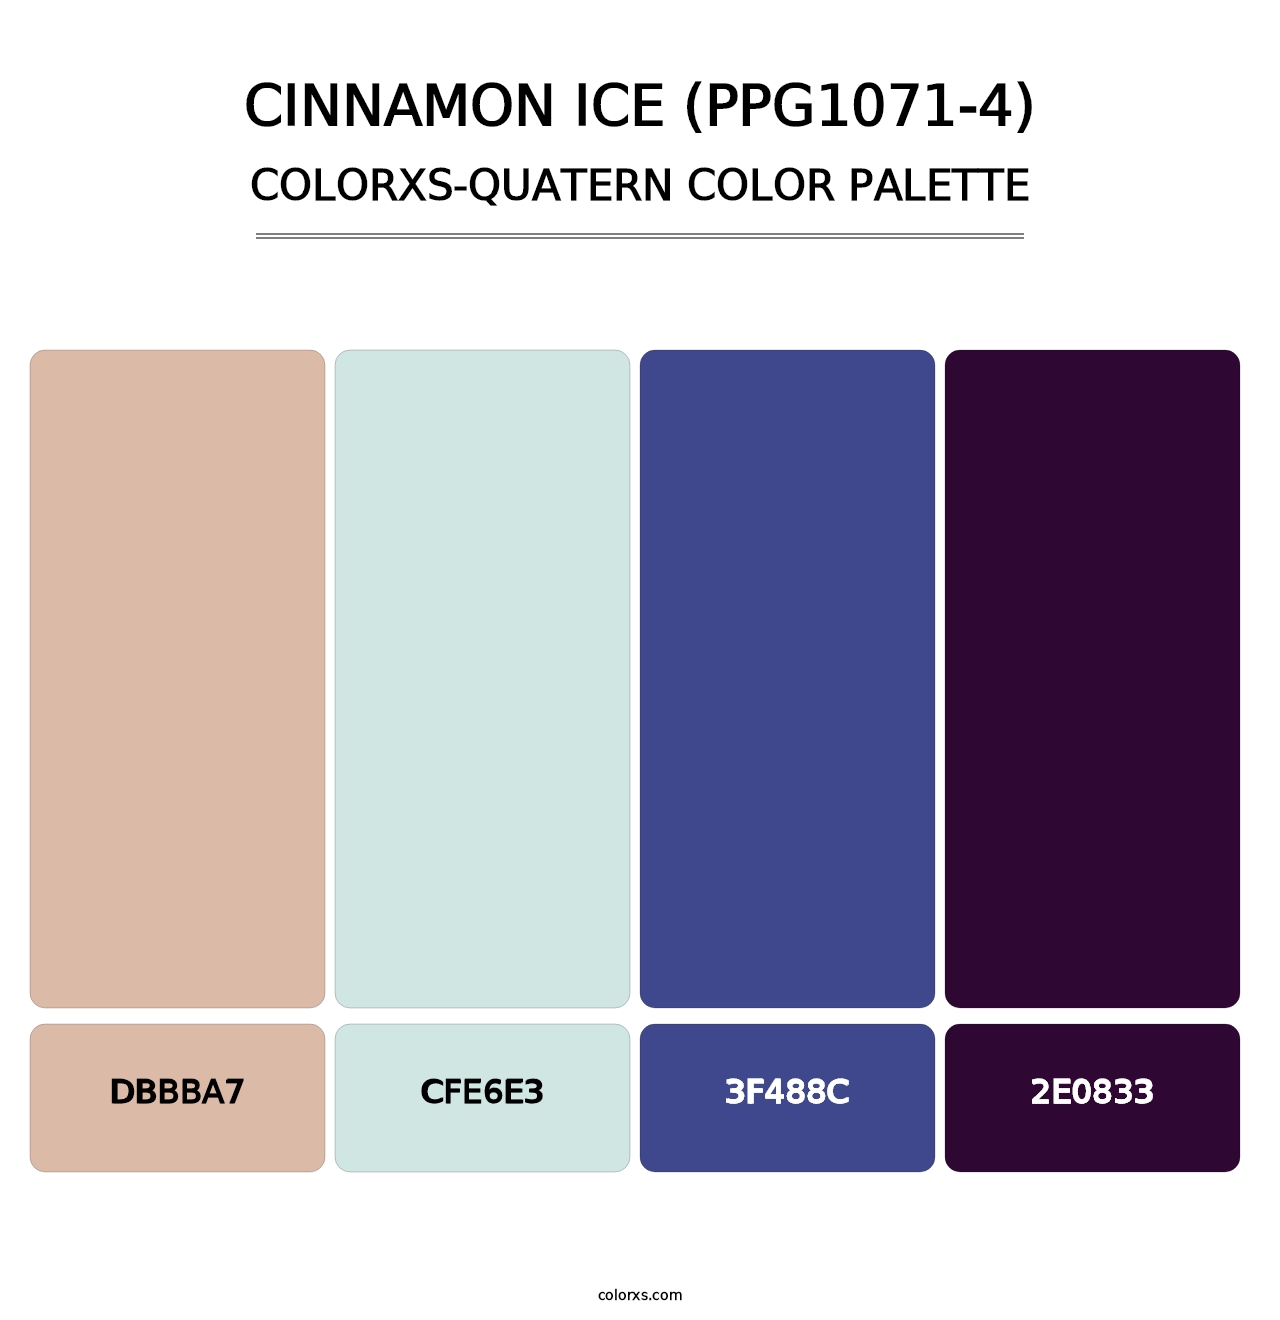 Cinnamon Ice (PPG1071-4) - Colorxs Quatern Palette